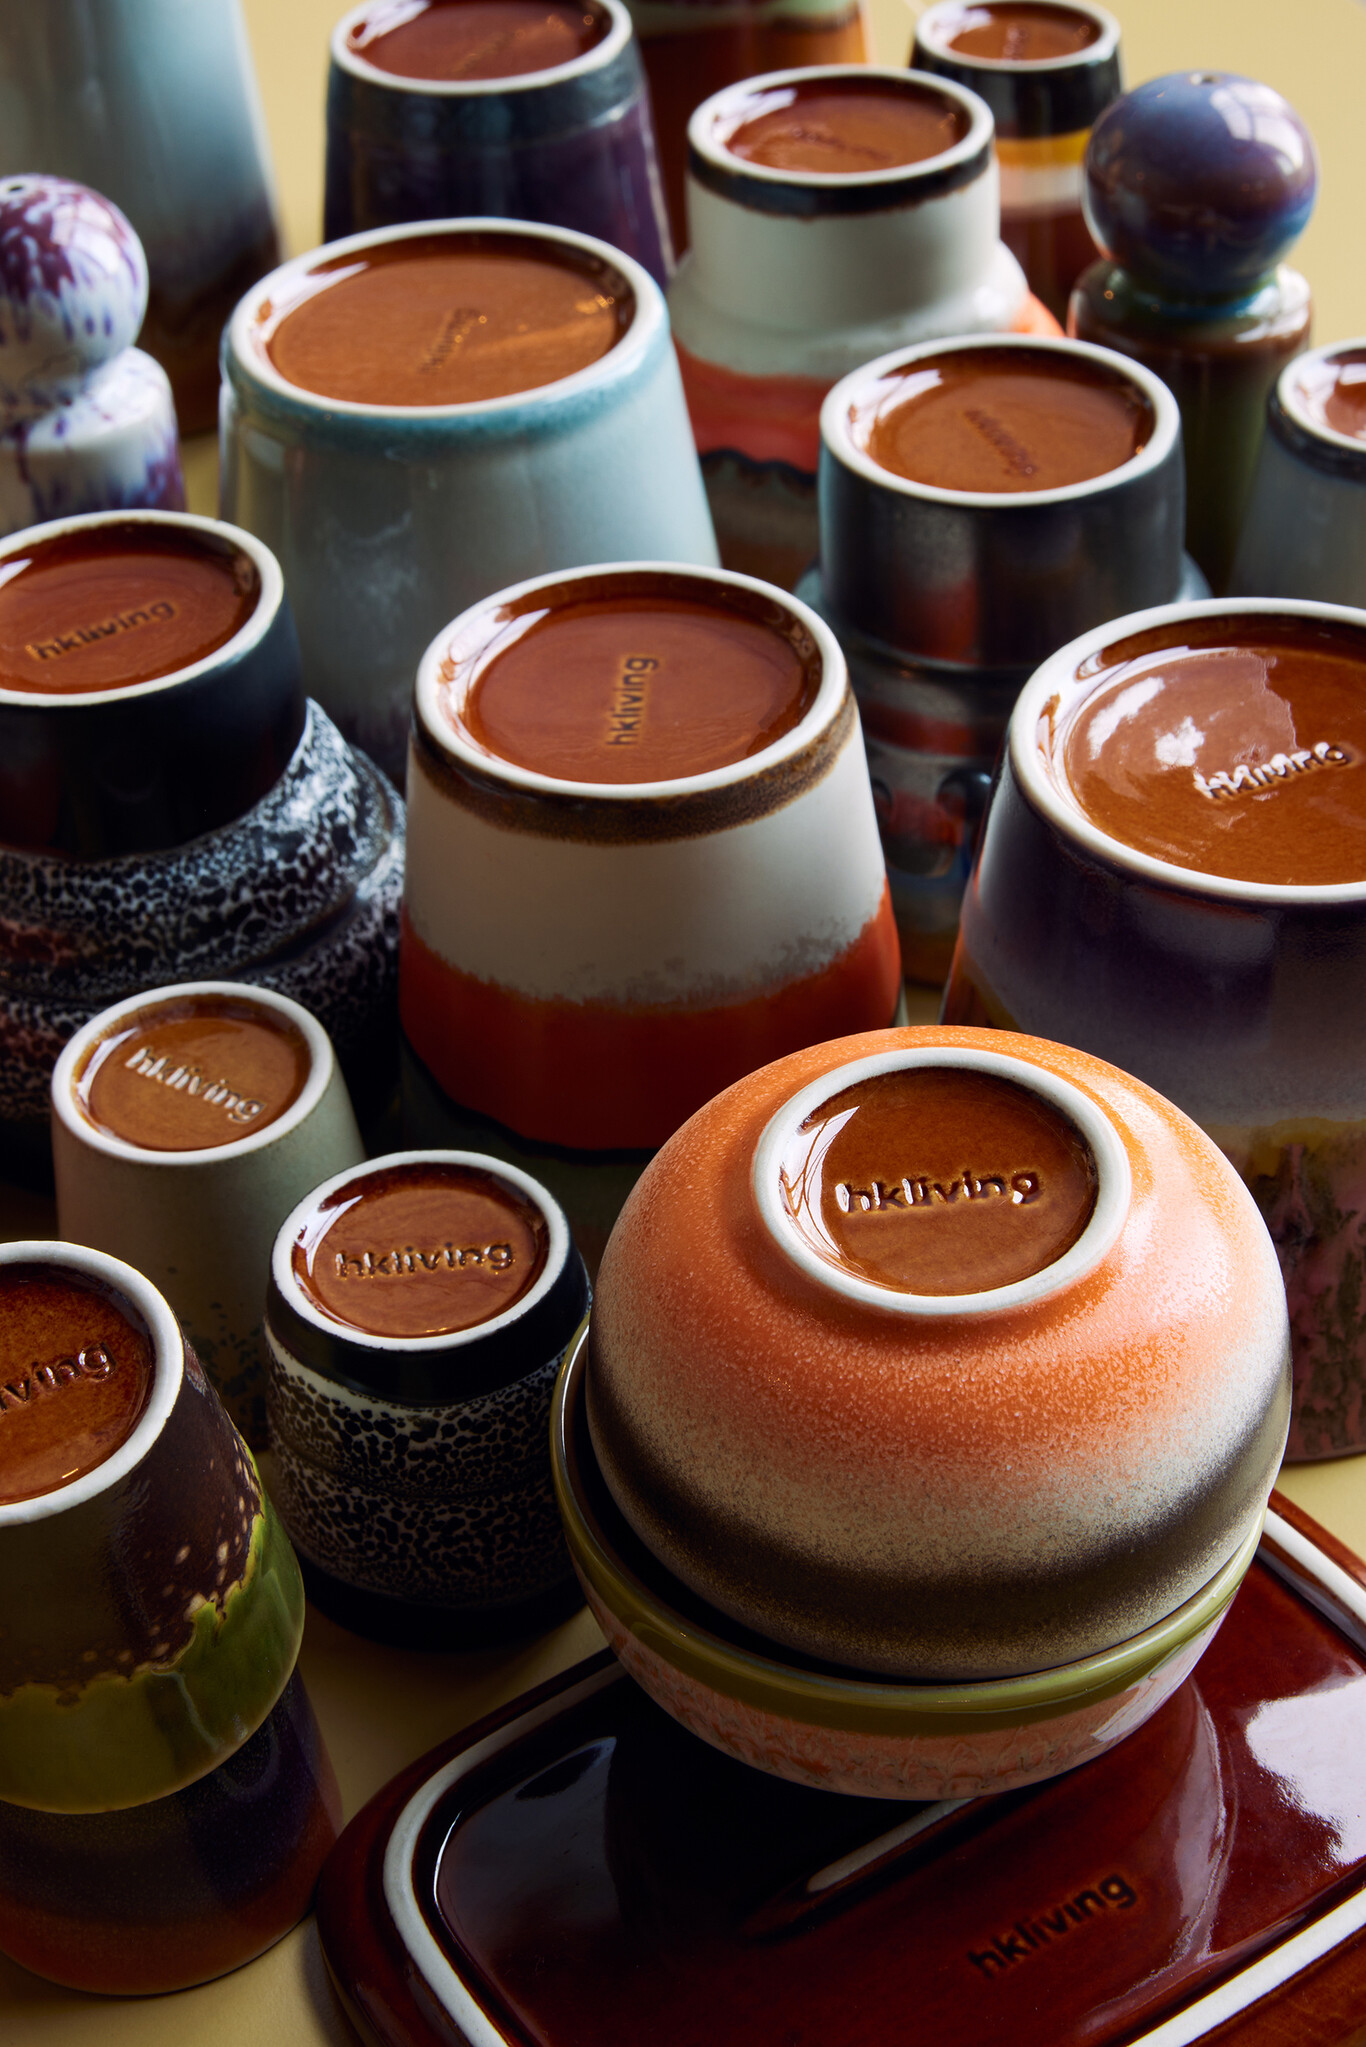 HKliving - Set of 4 70's Ceramic Espresso Mugs - Ceramic | 80ml